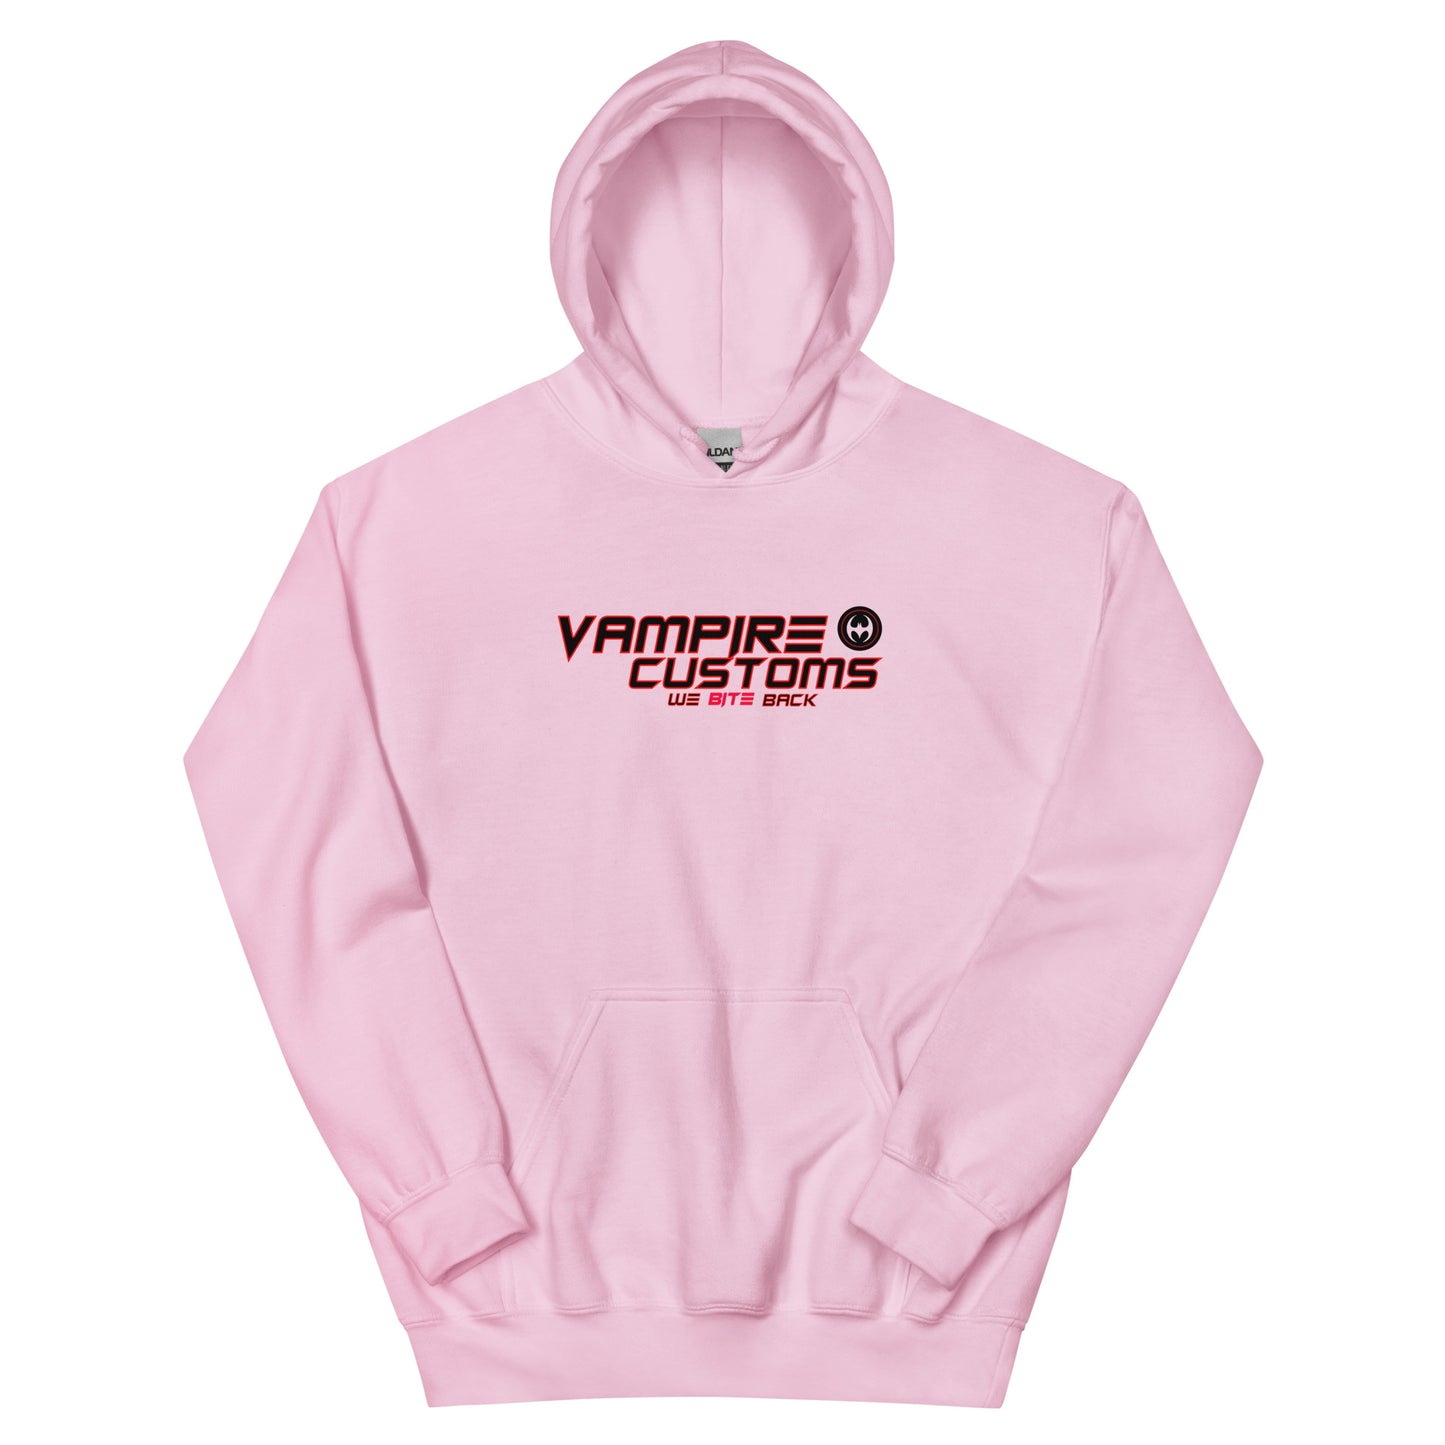 Vampire Customs Logo Unisex Hoodie Sweatshirt Multiple Colors and Sizes